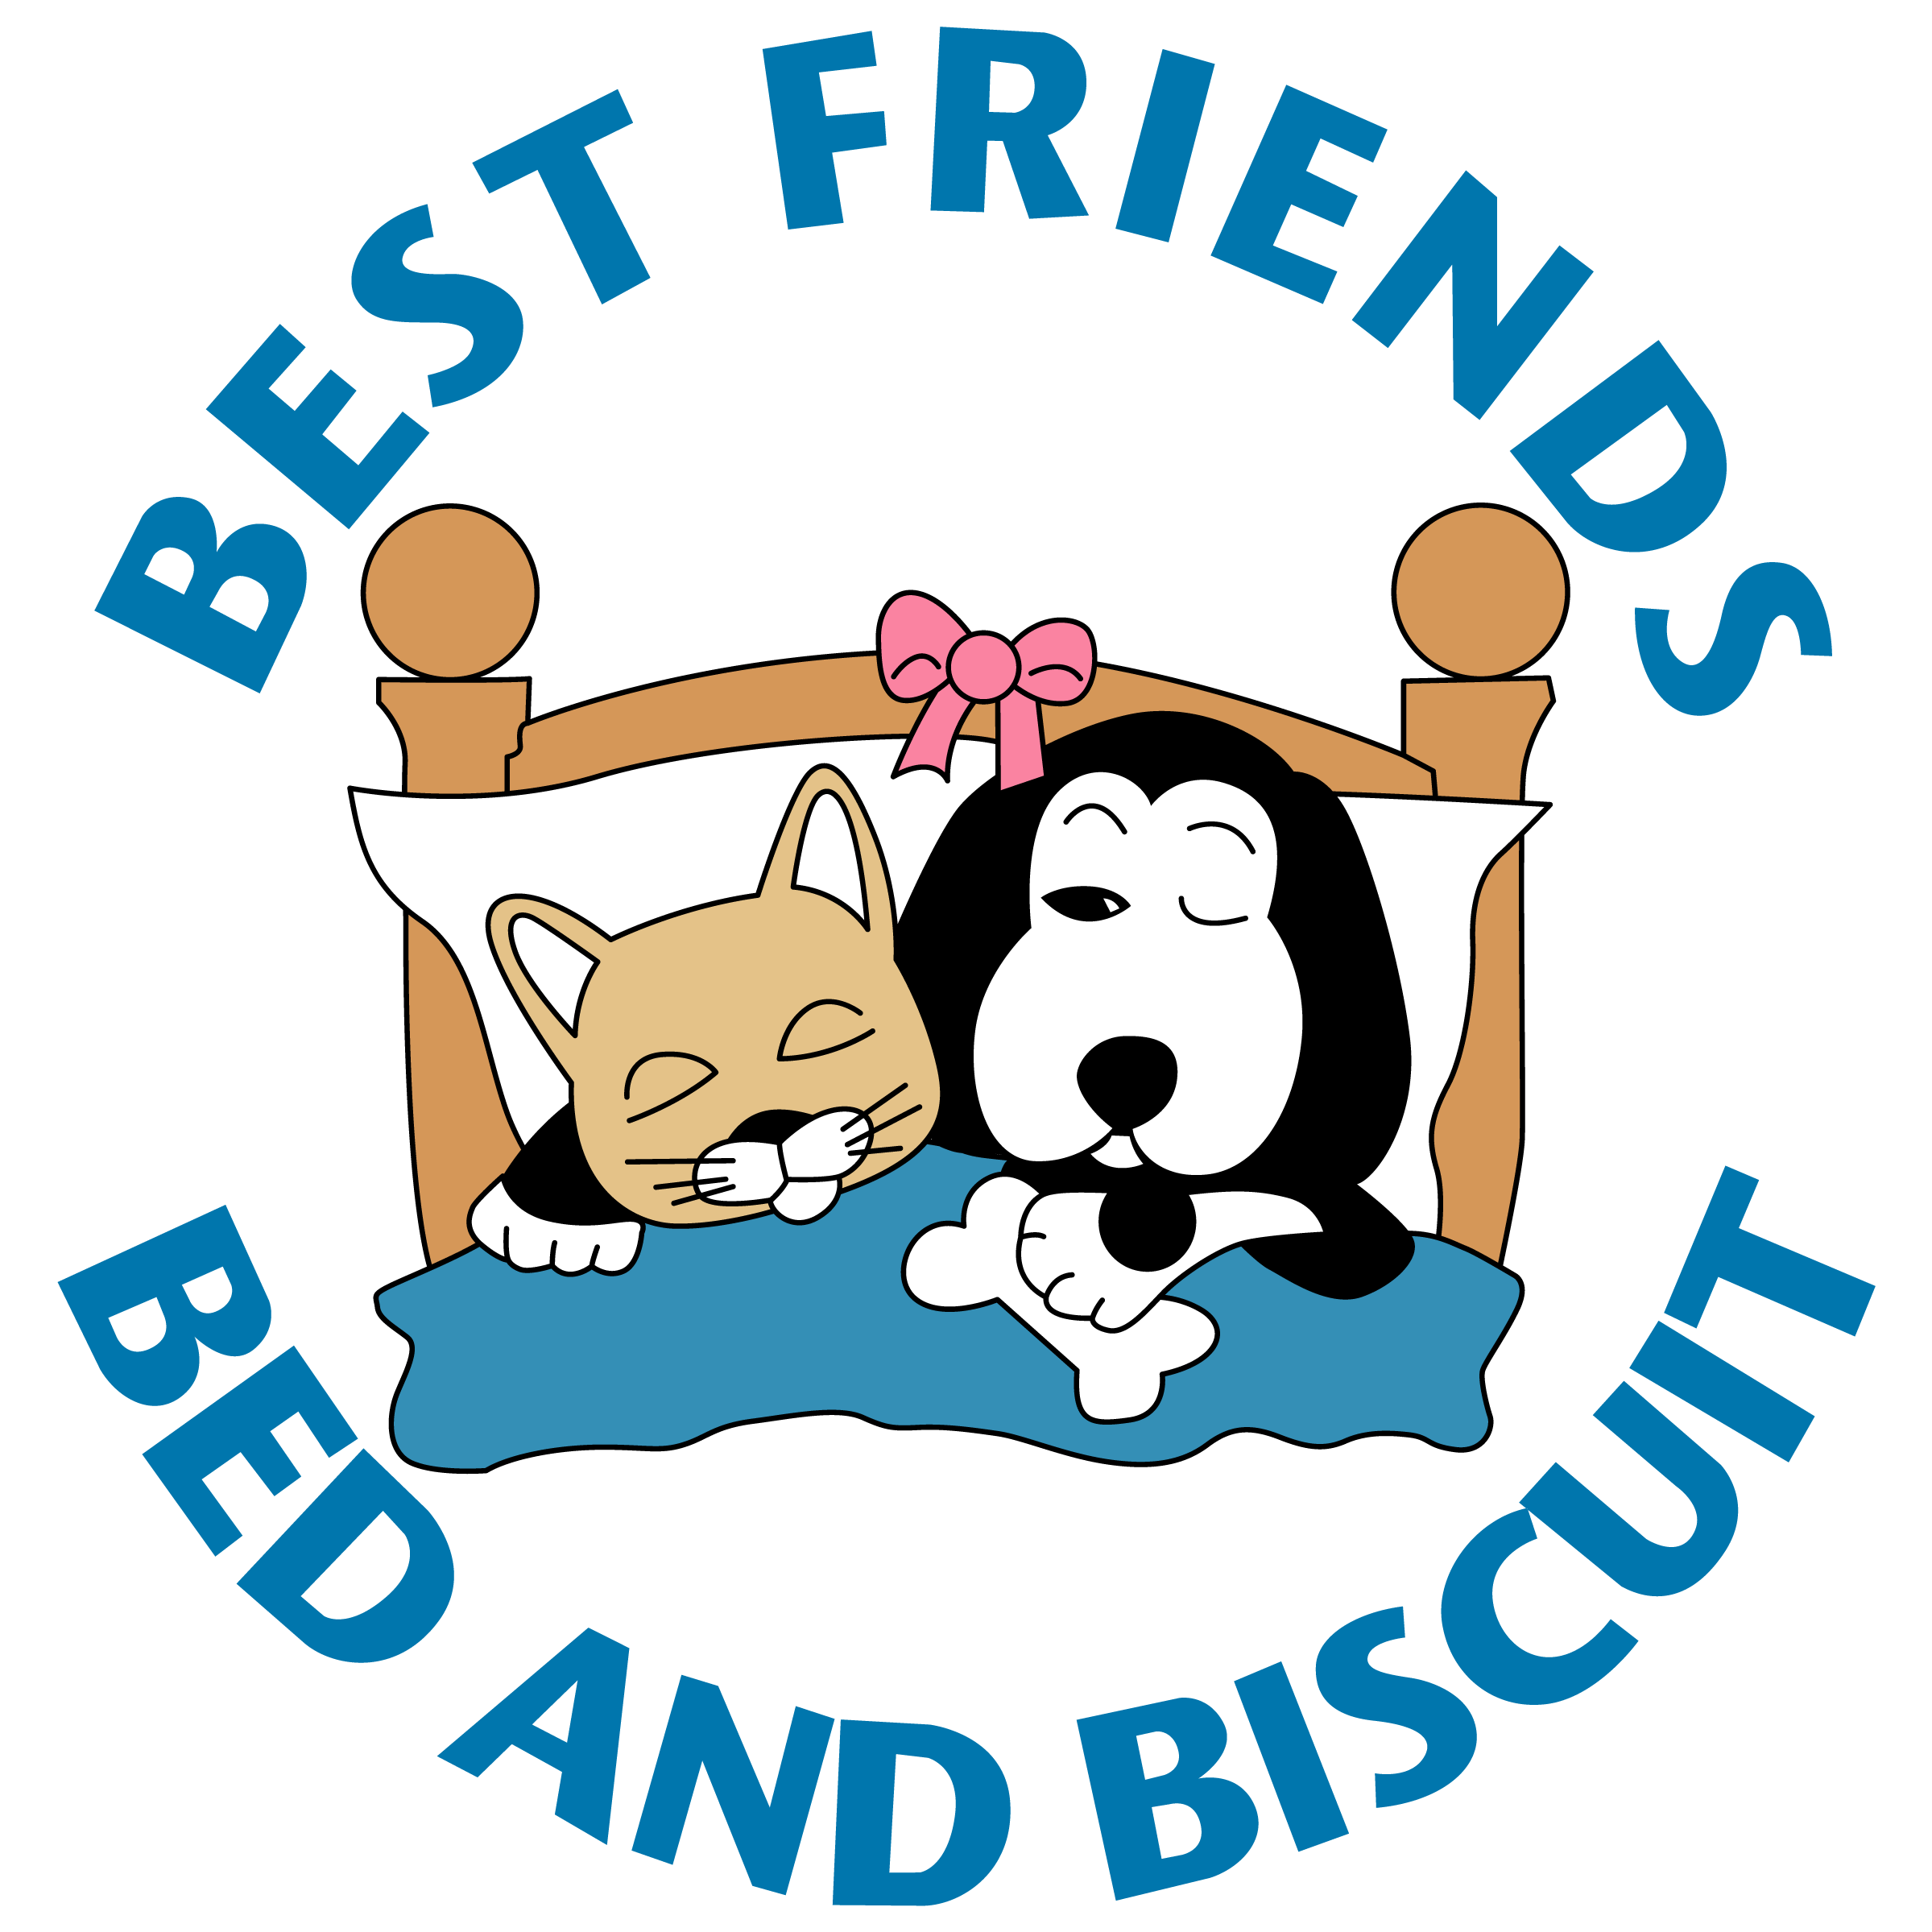 Best Friends Bed & Biscuit